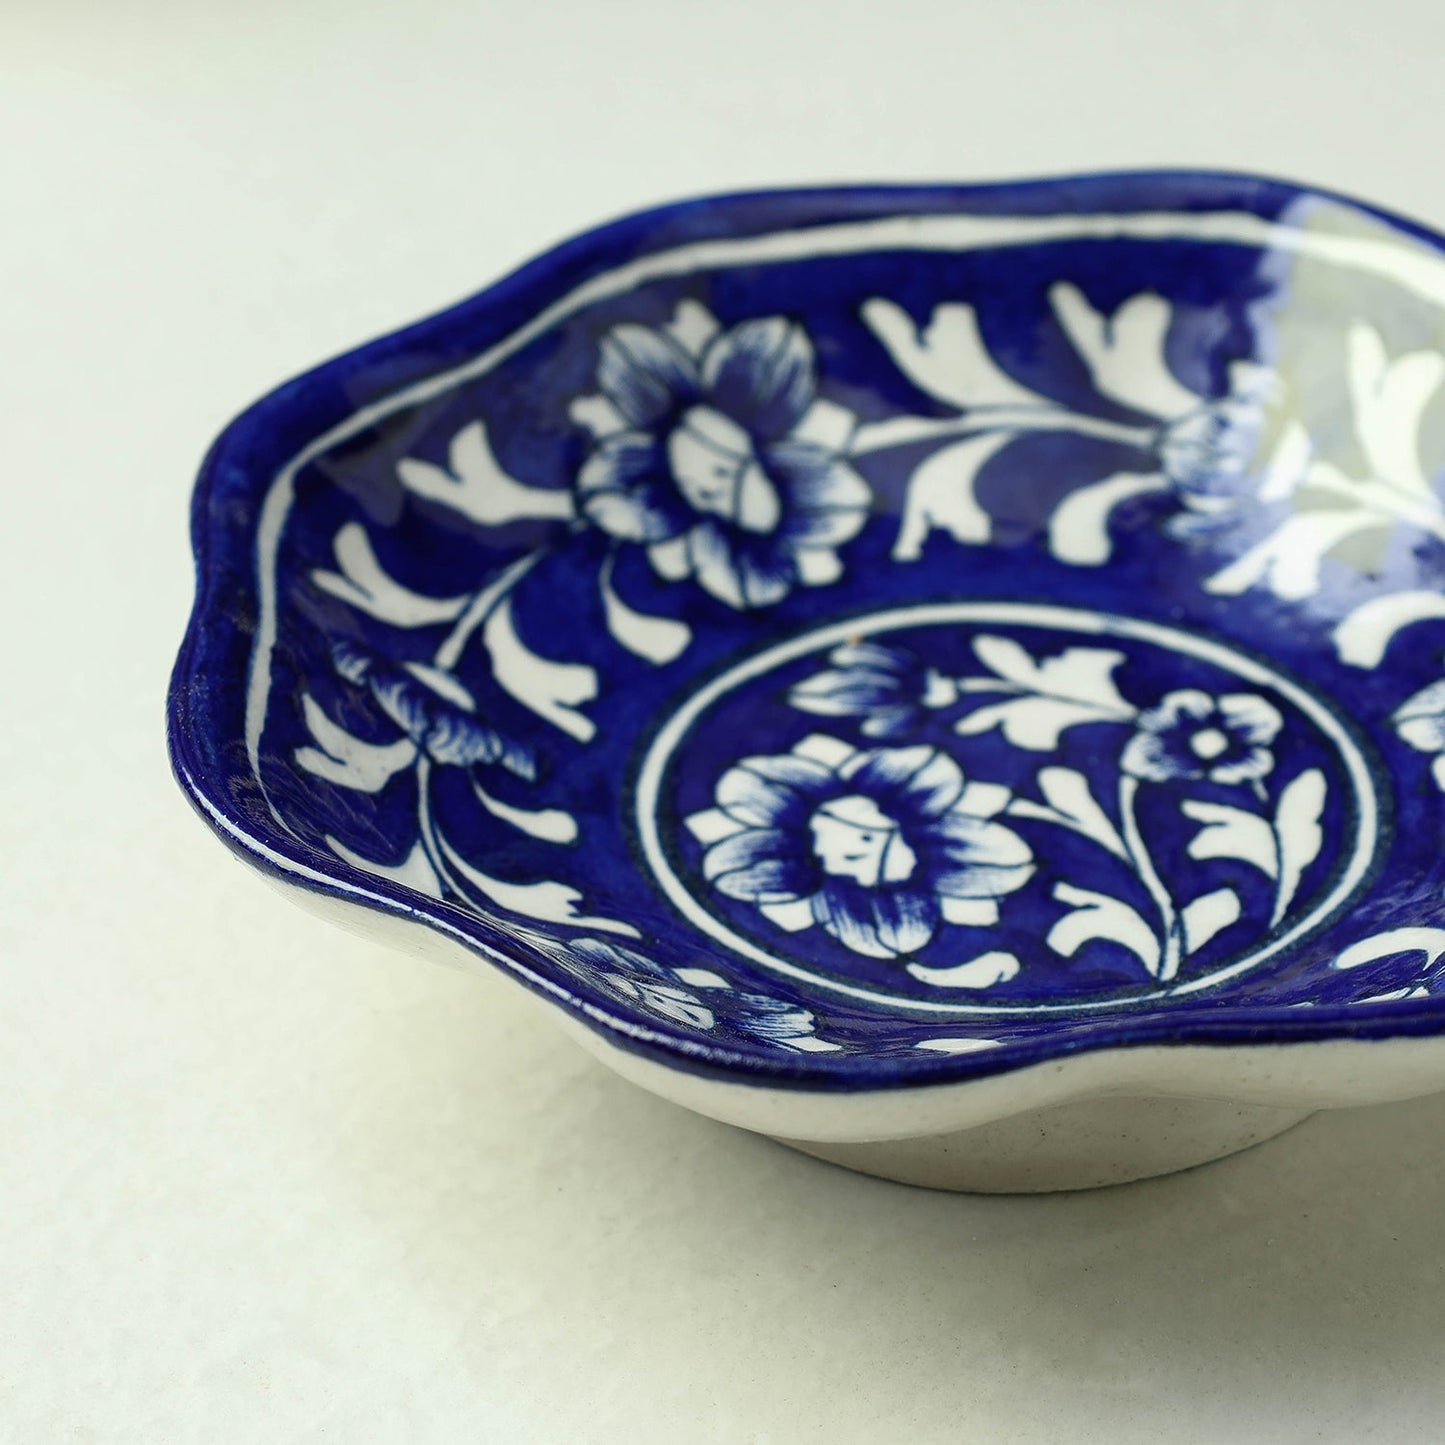 Original Blue Pottery Ceramic Bowl (6 x 6 in)